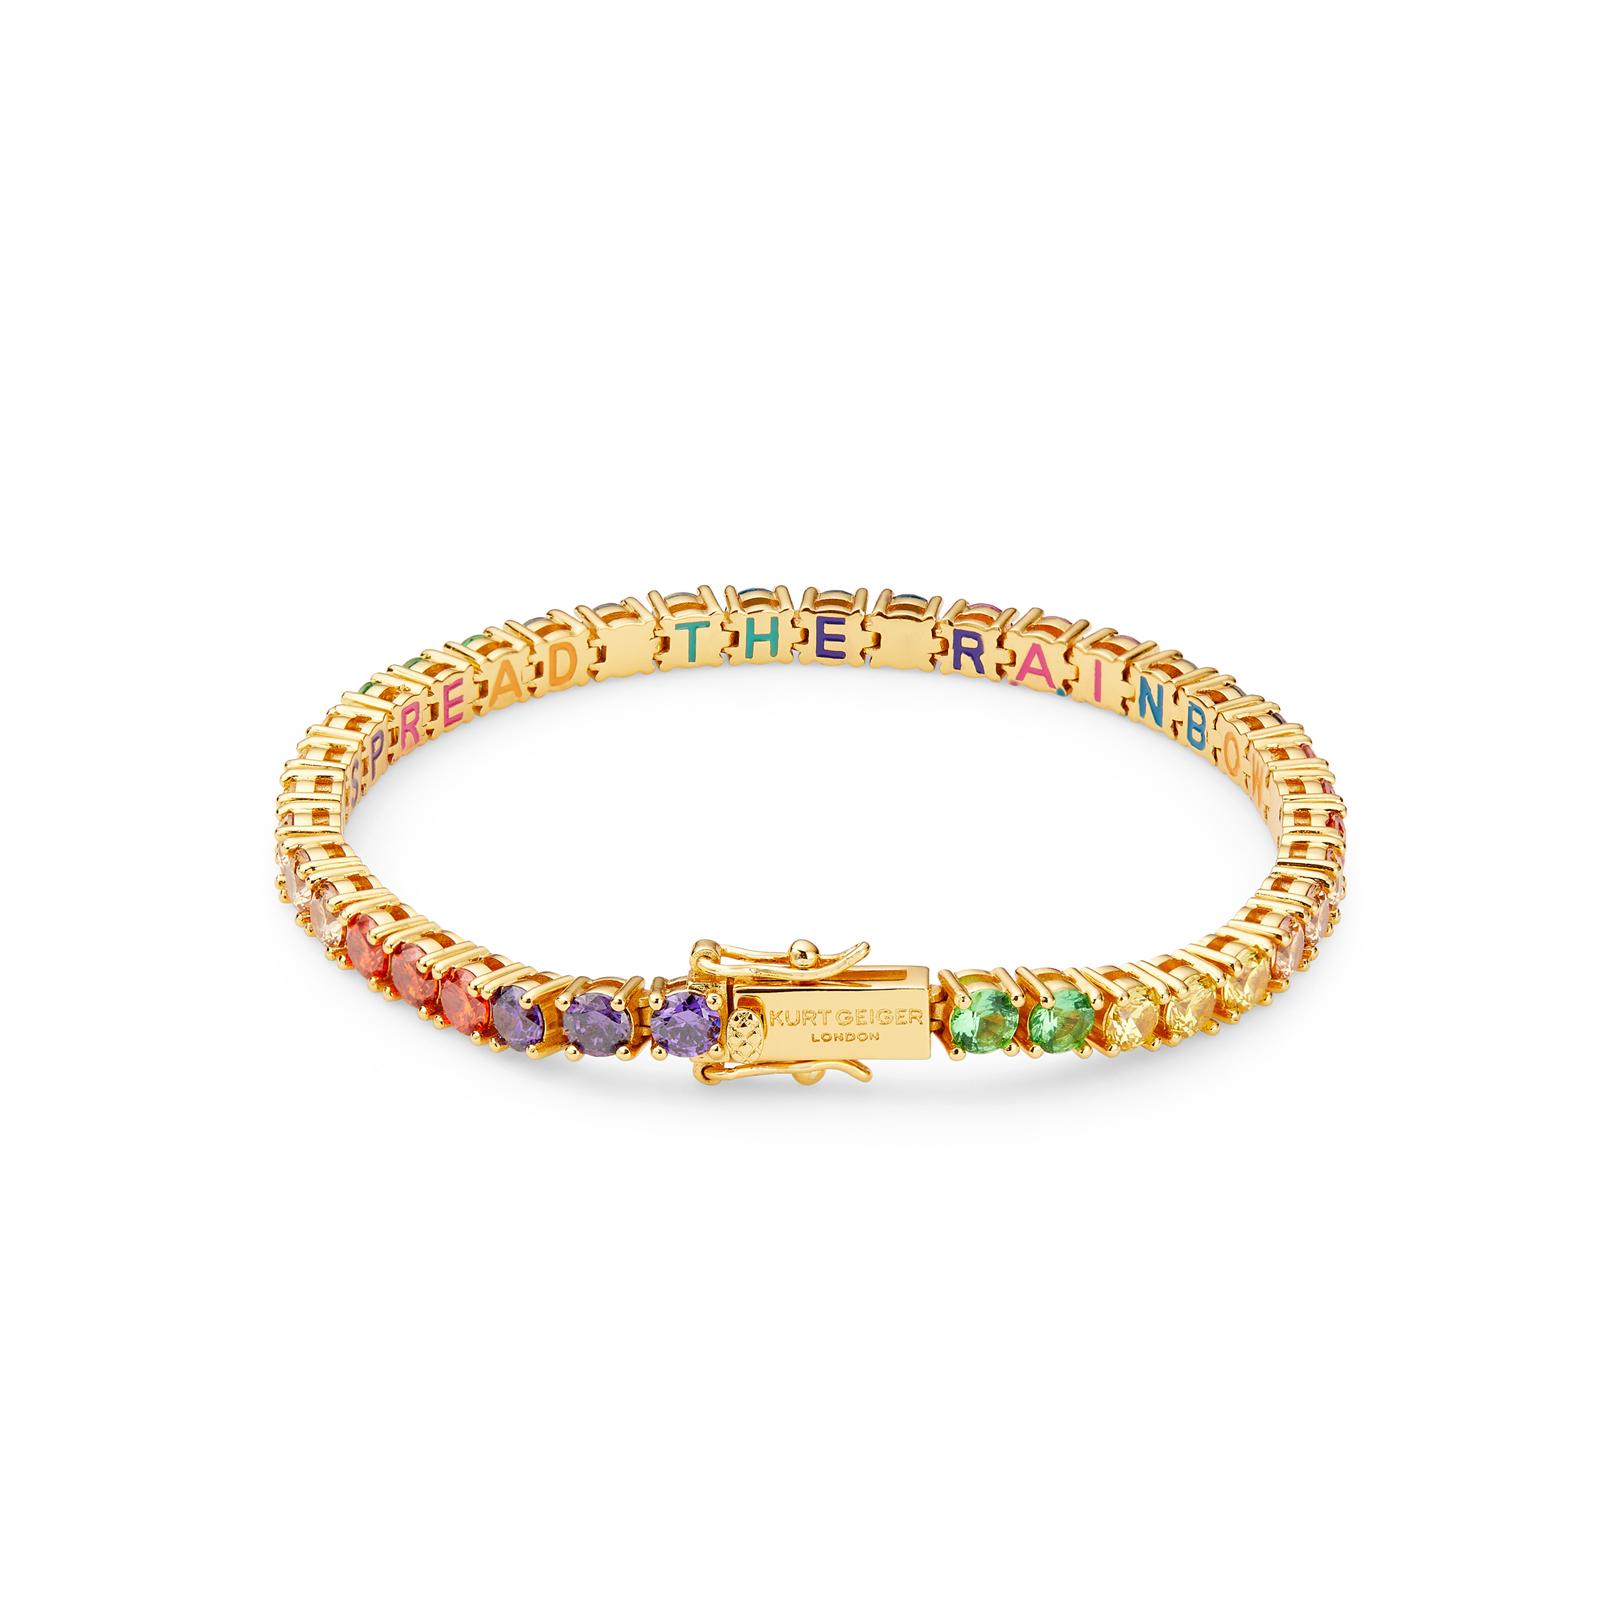 TENNIS BRACELET Rainbow Jewel Tennis Bracelet by KURT GEIGER LONDON